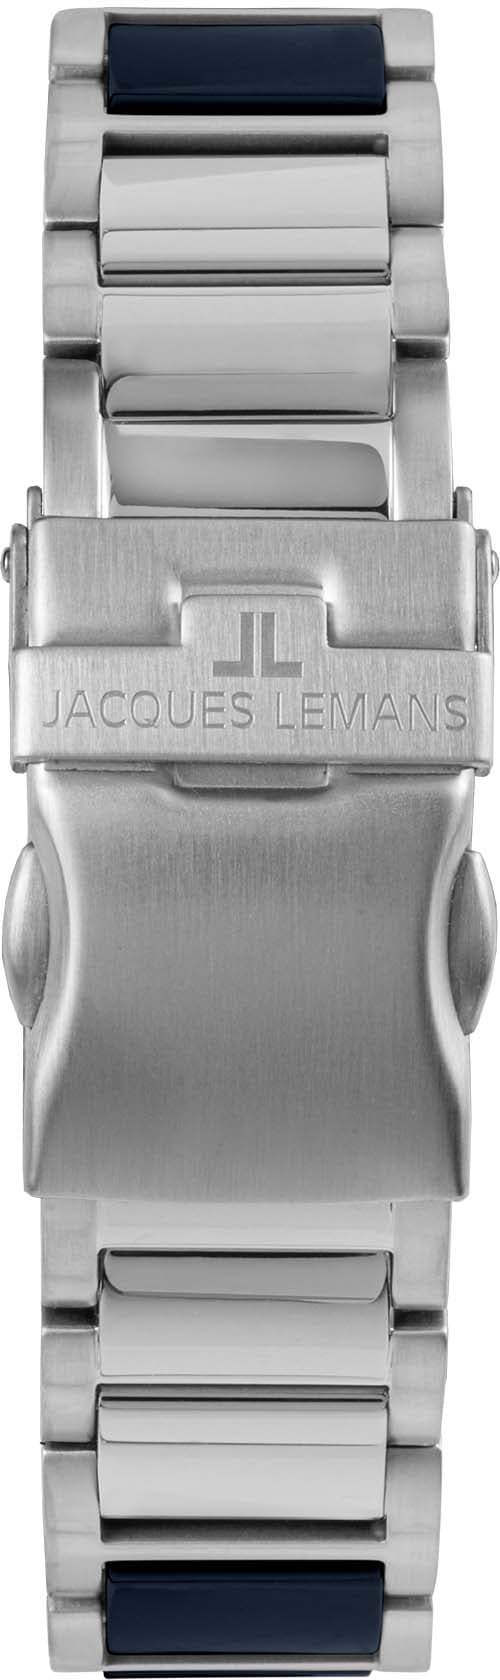 Jacques Lemans Keramikuhr »Liverpool, 42-12B«